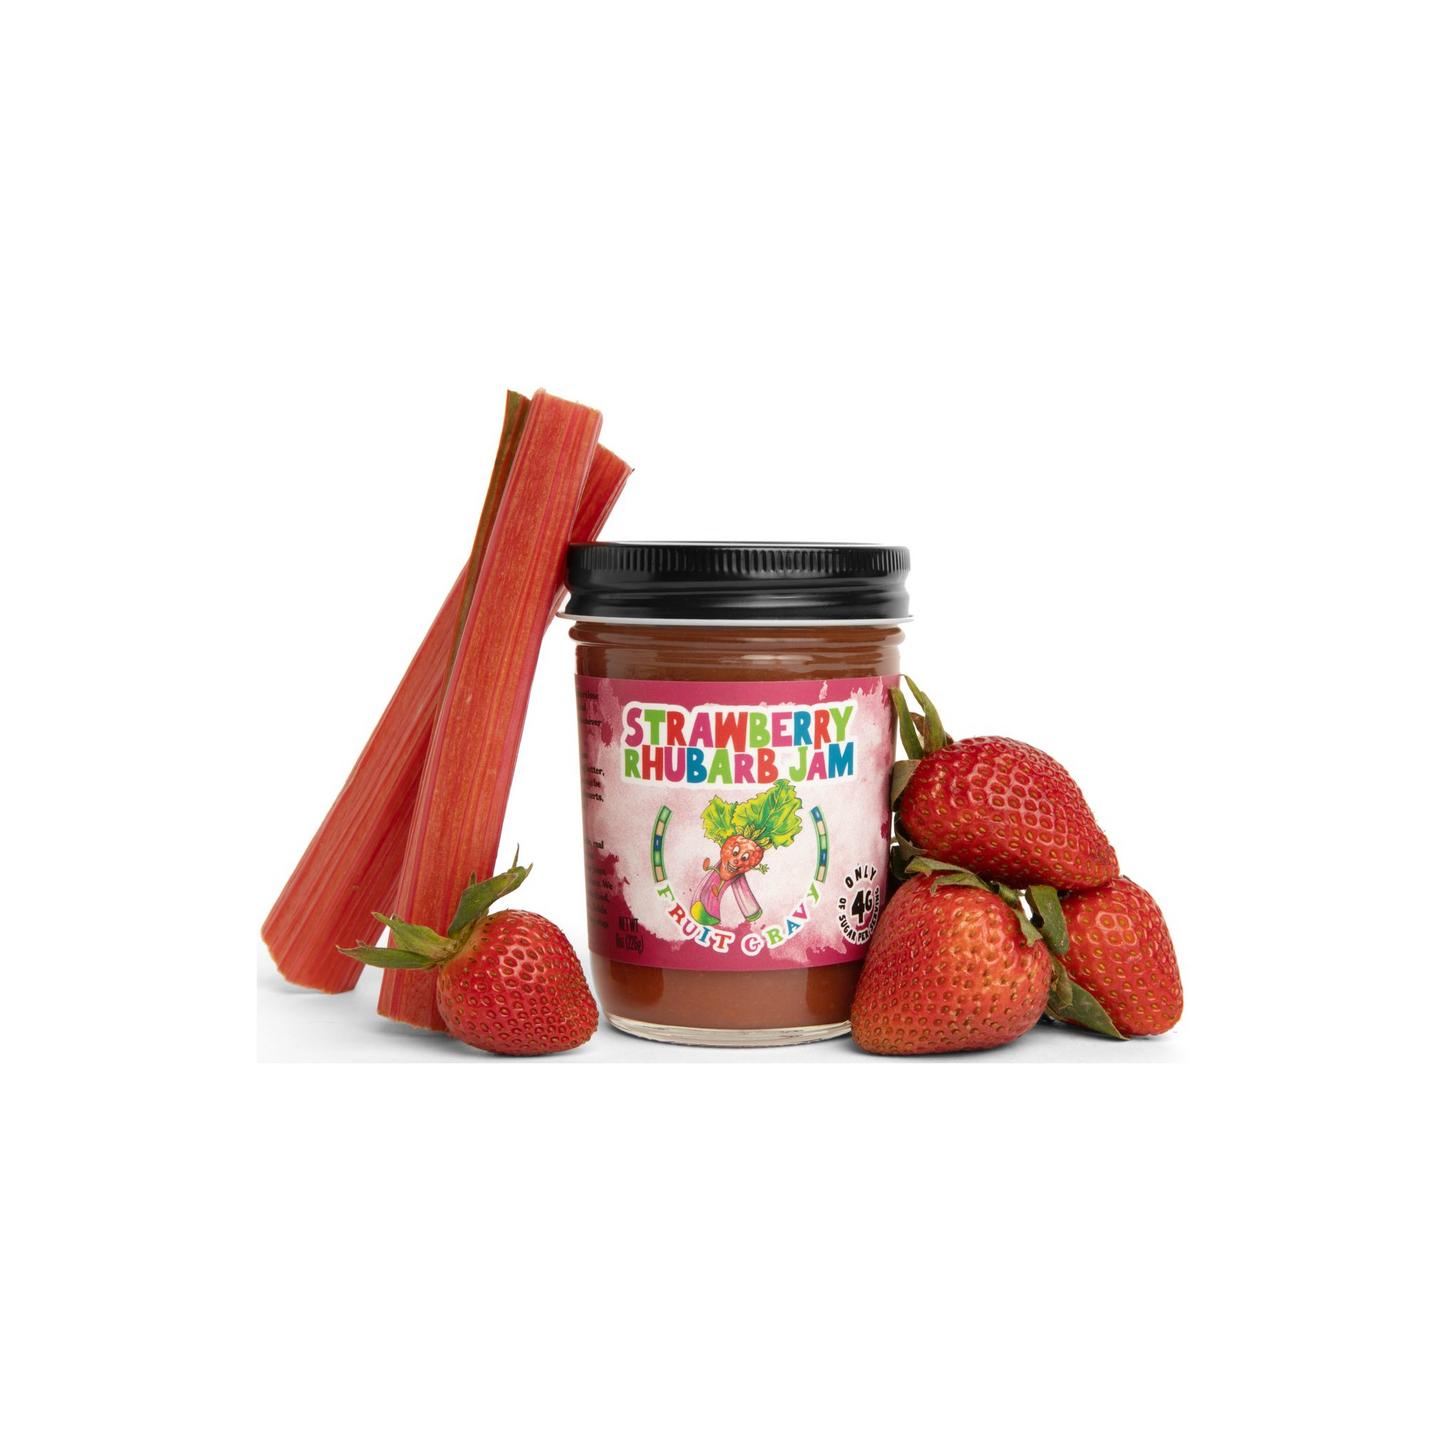 Strawberry Rhubarb 8oz. 6pk case